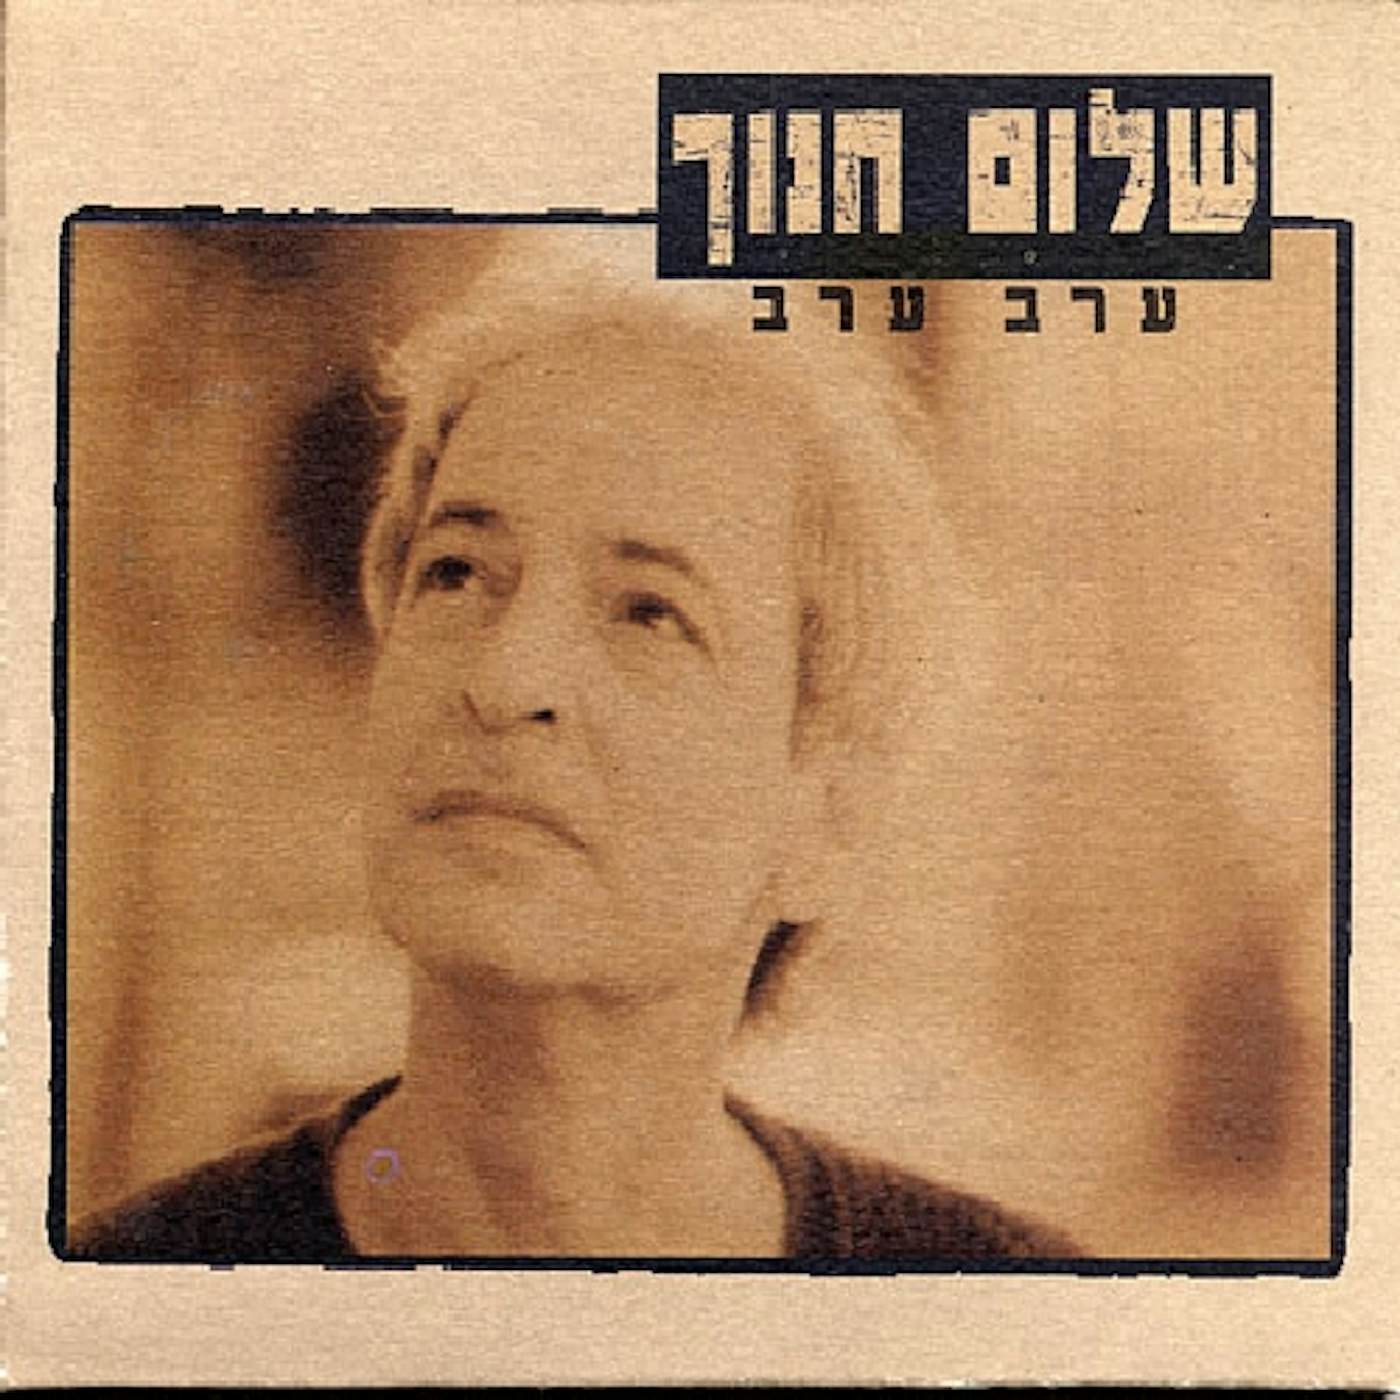 Shalom Hanoch EACH NIGHT CD